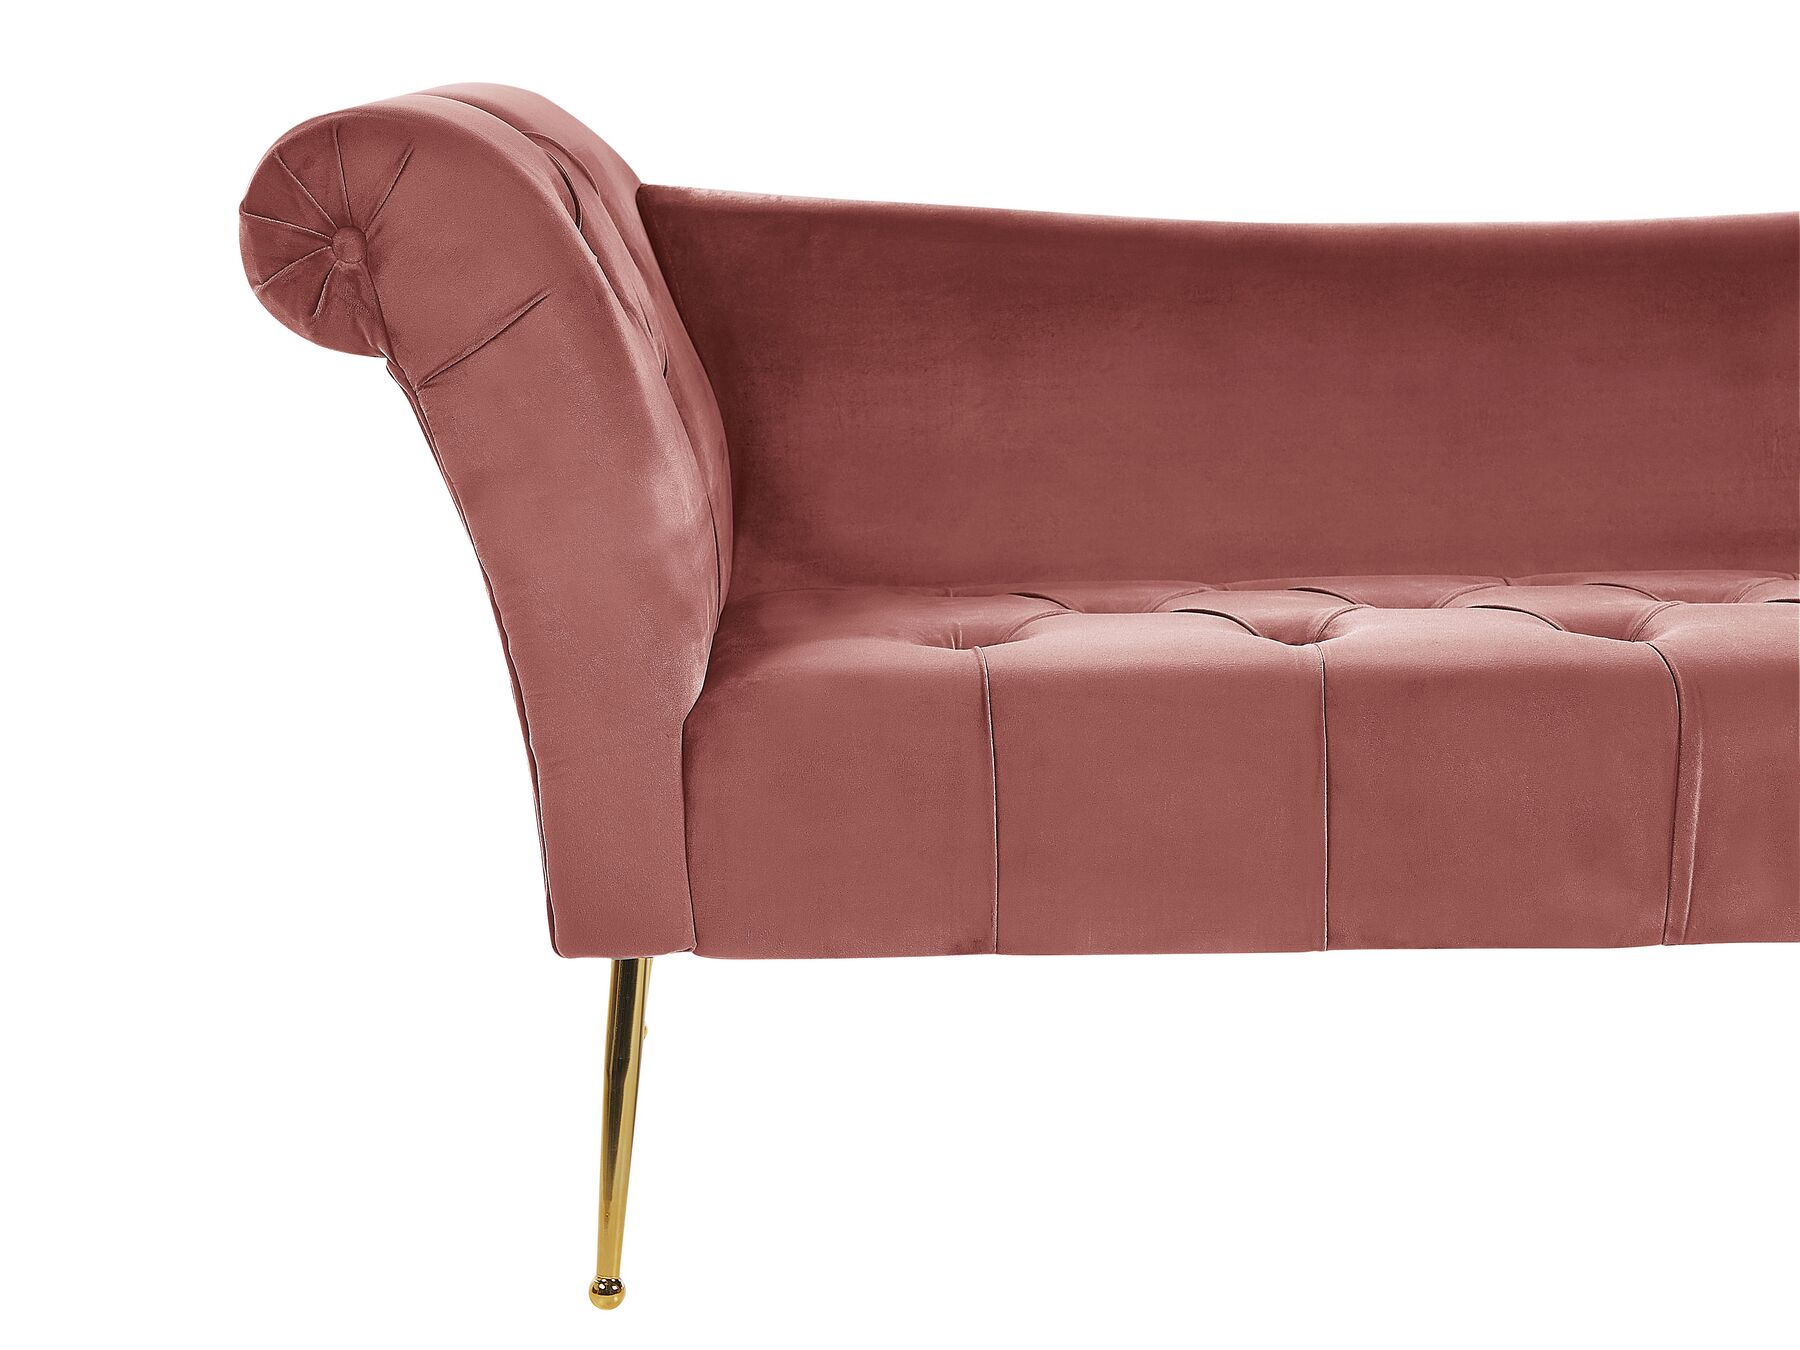 Nantilly Velvet Chaise Lounge Pink